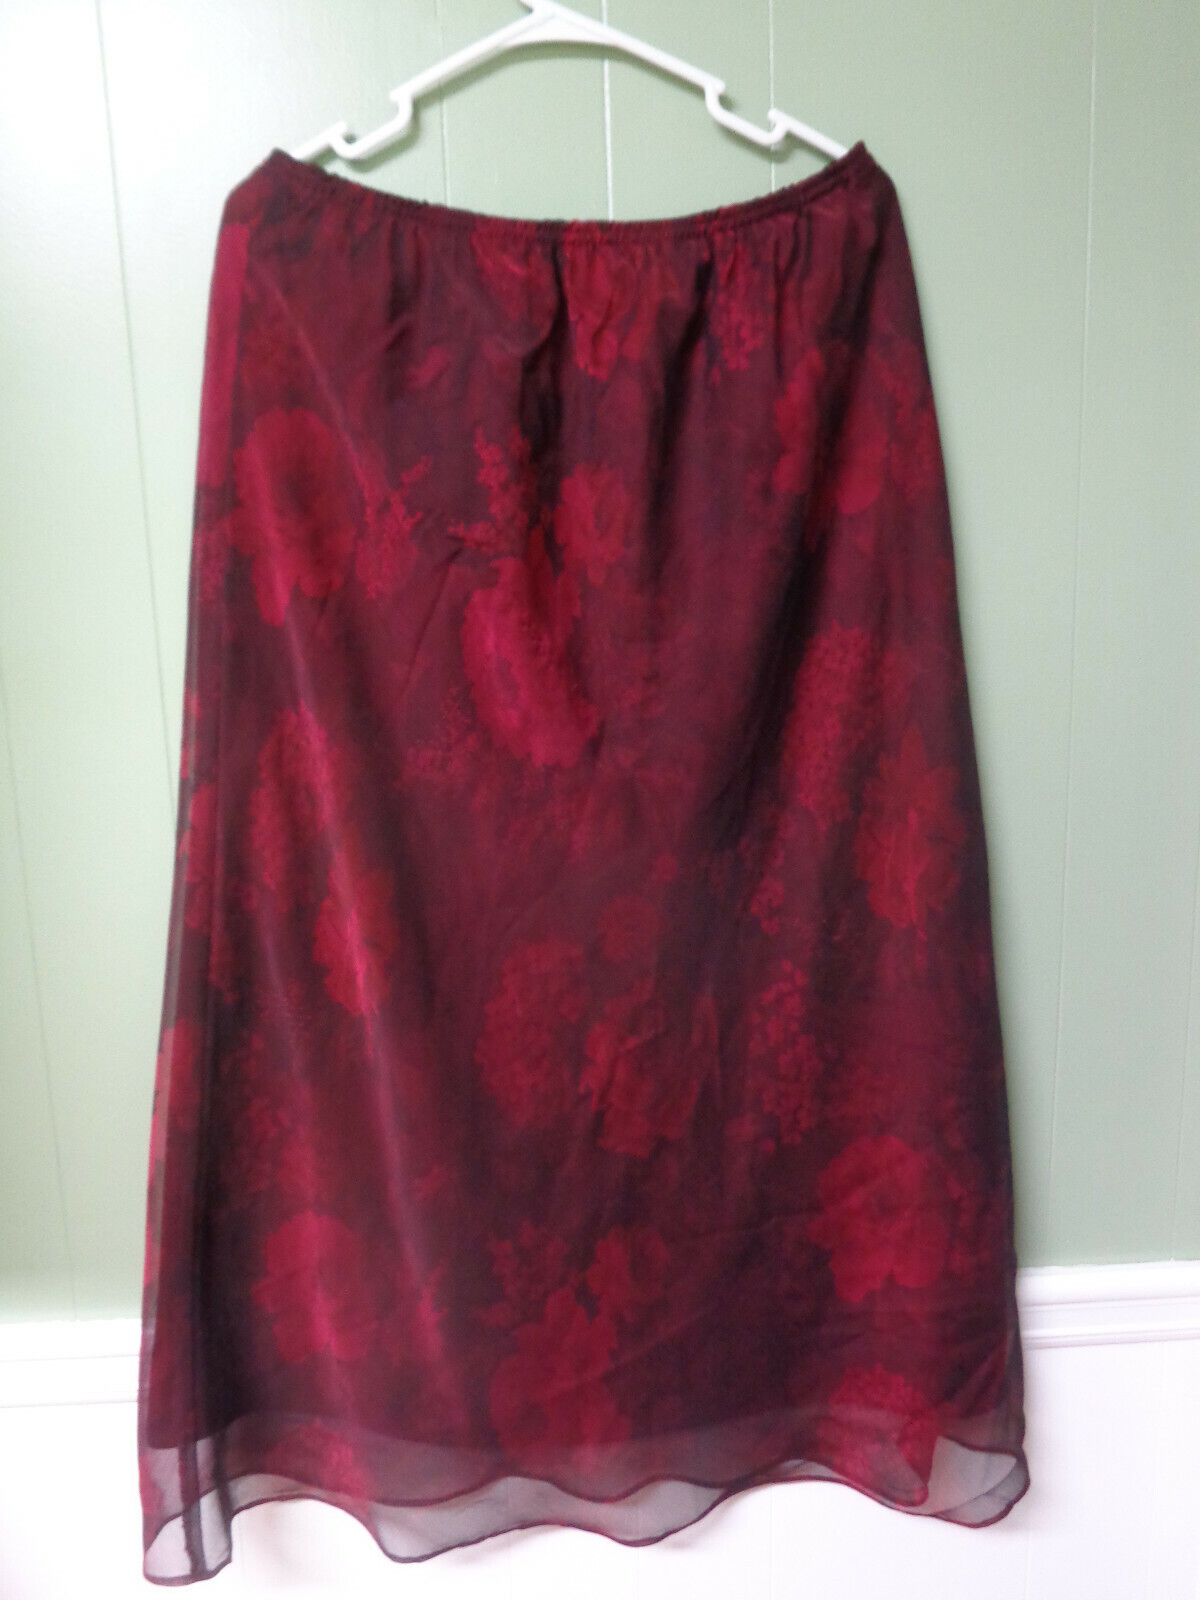 Women\'s lined long skirt elastic waist (burgundy/floral) size 16 R&M Richards